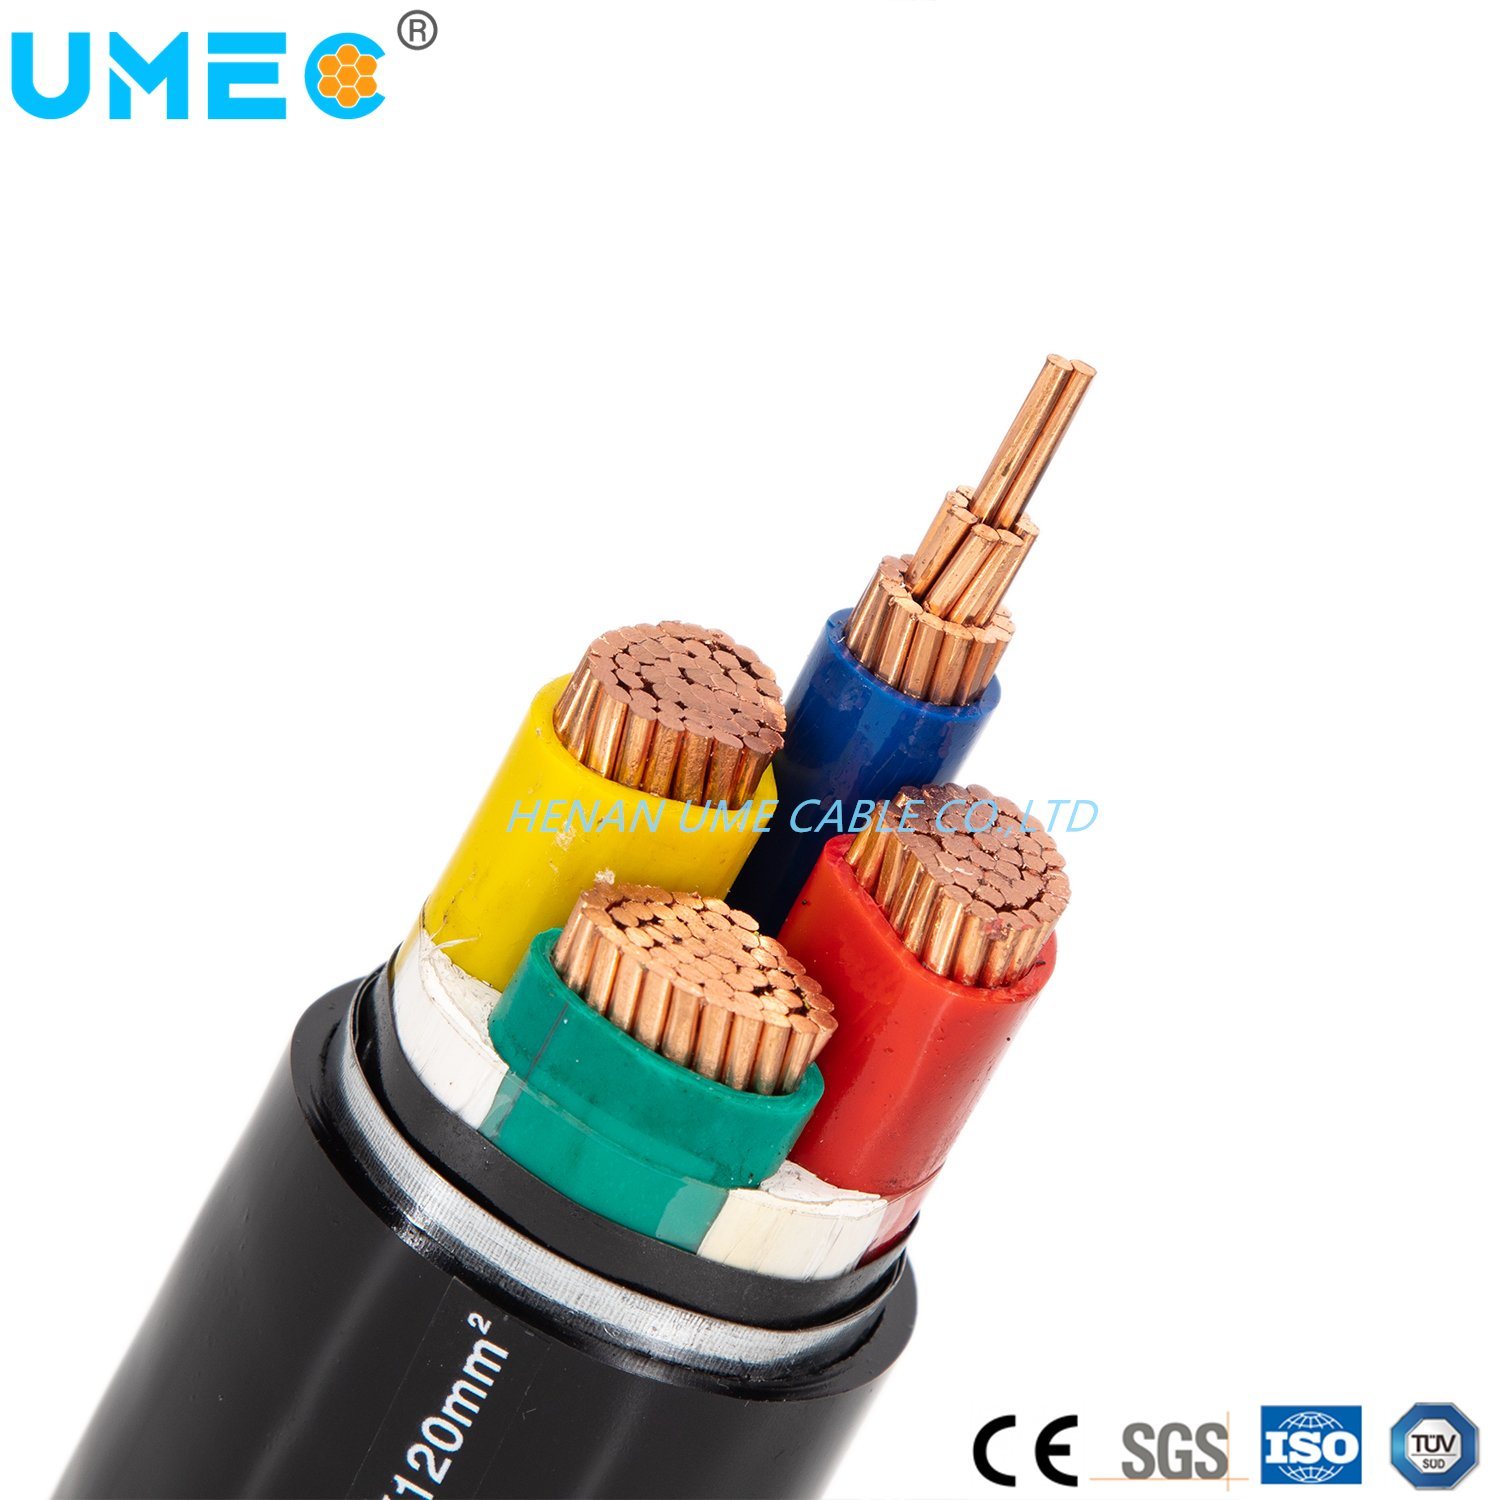 High Temperature Resistant (Flame Retardant) Power Cable